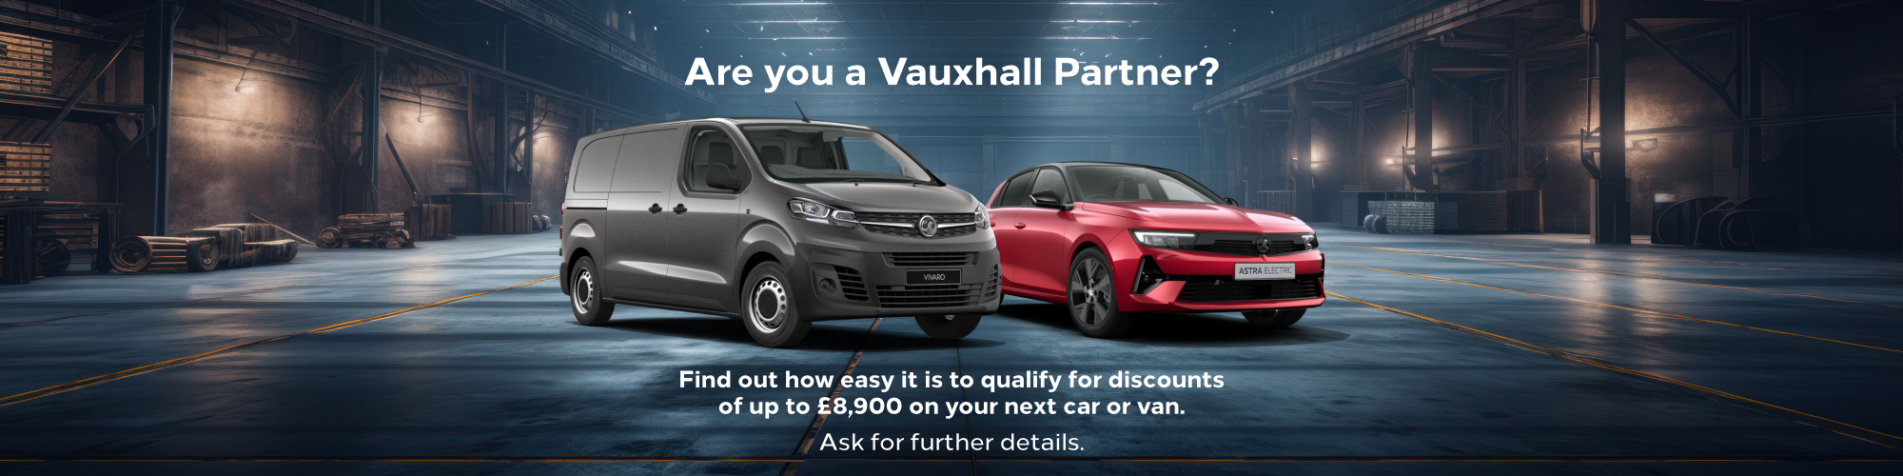 County Vauxhall Partners